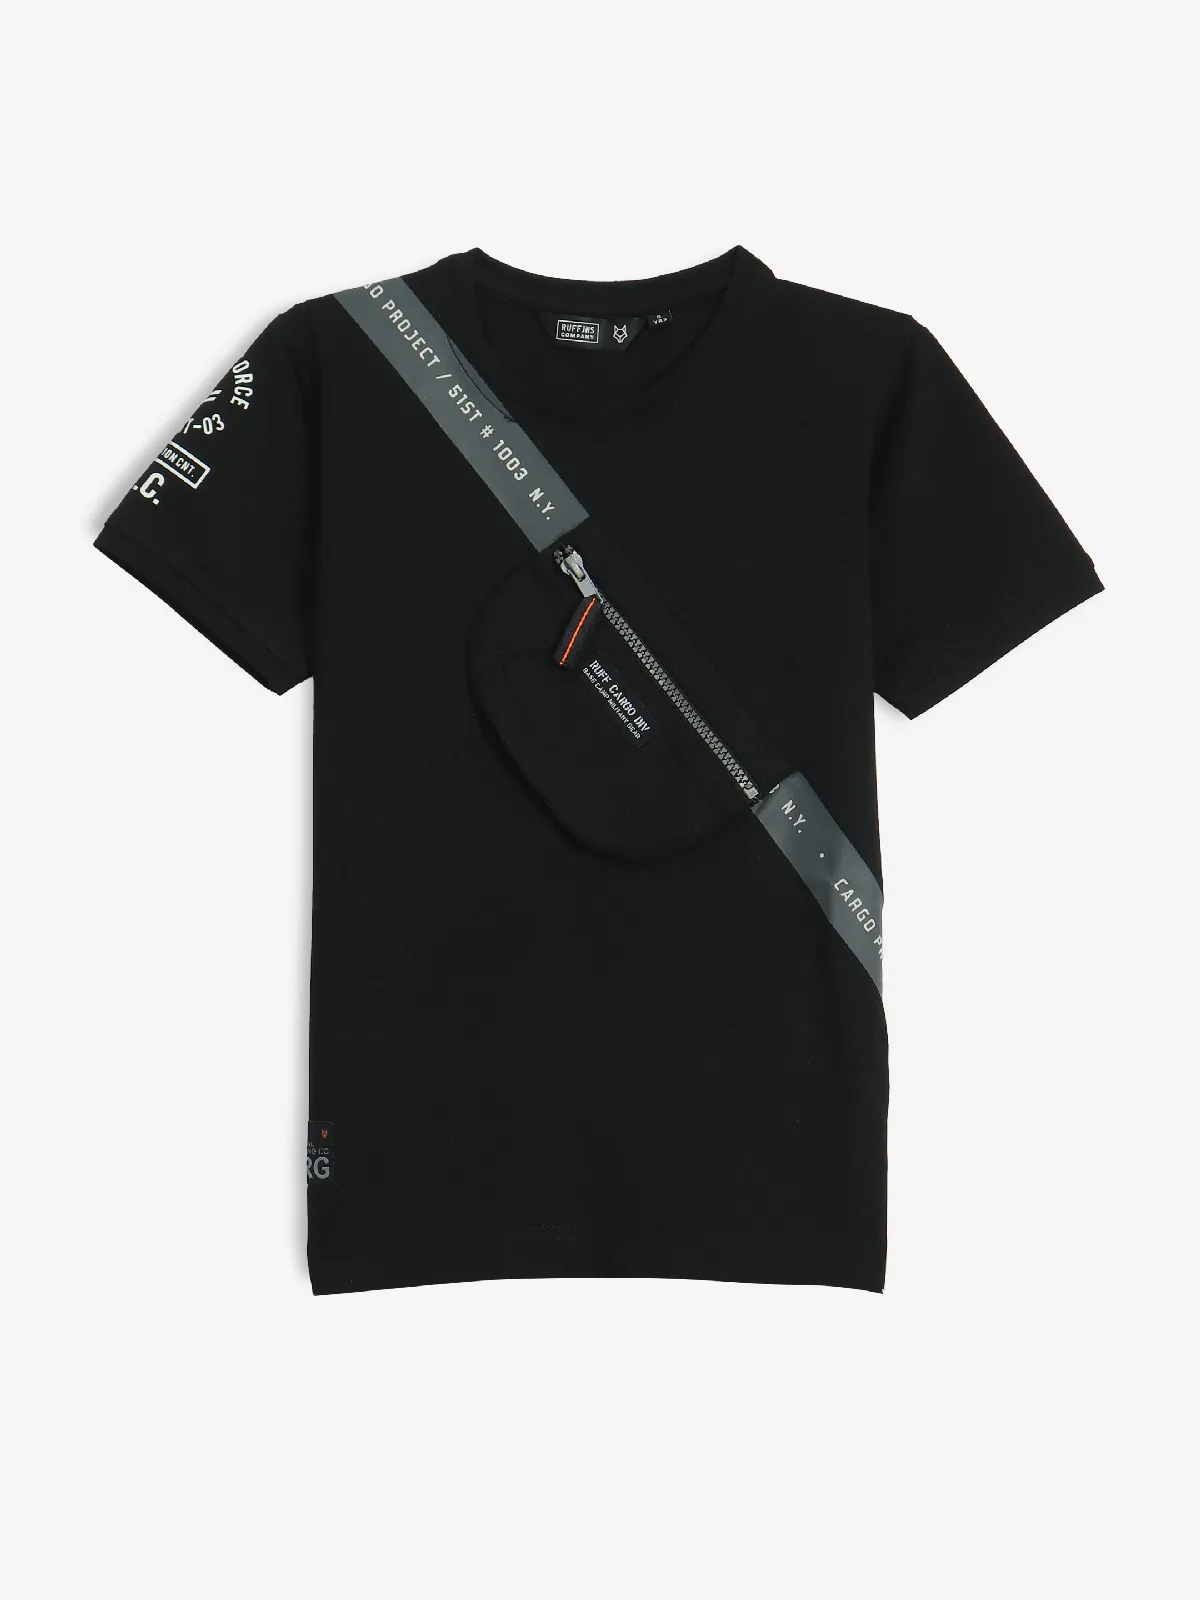 RUFF plain cotton t-shirt in black